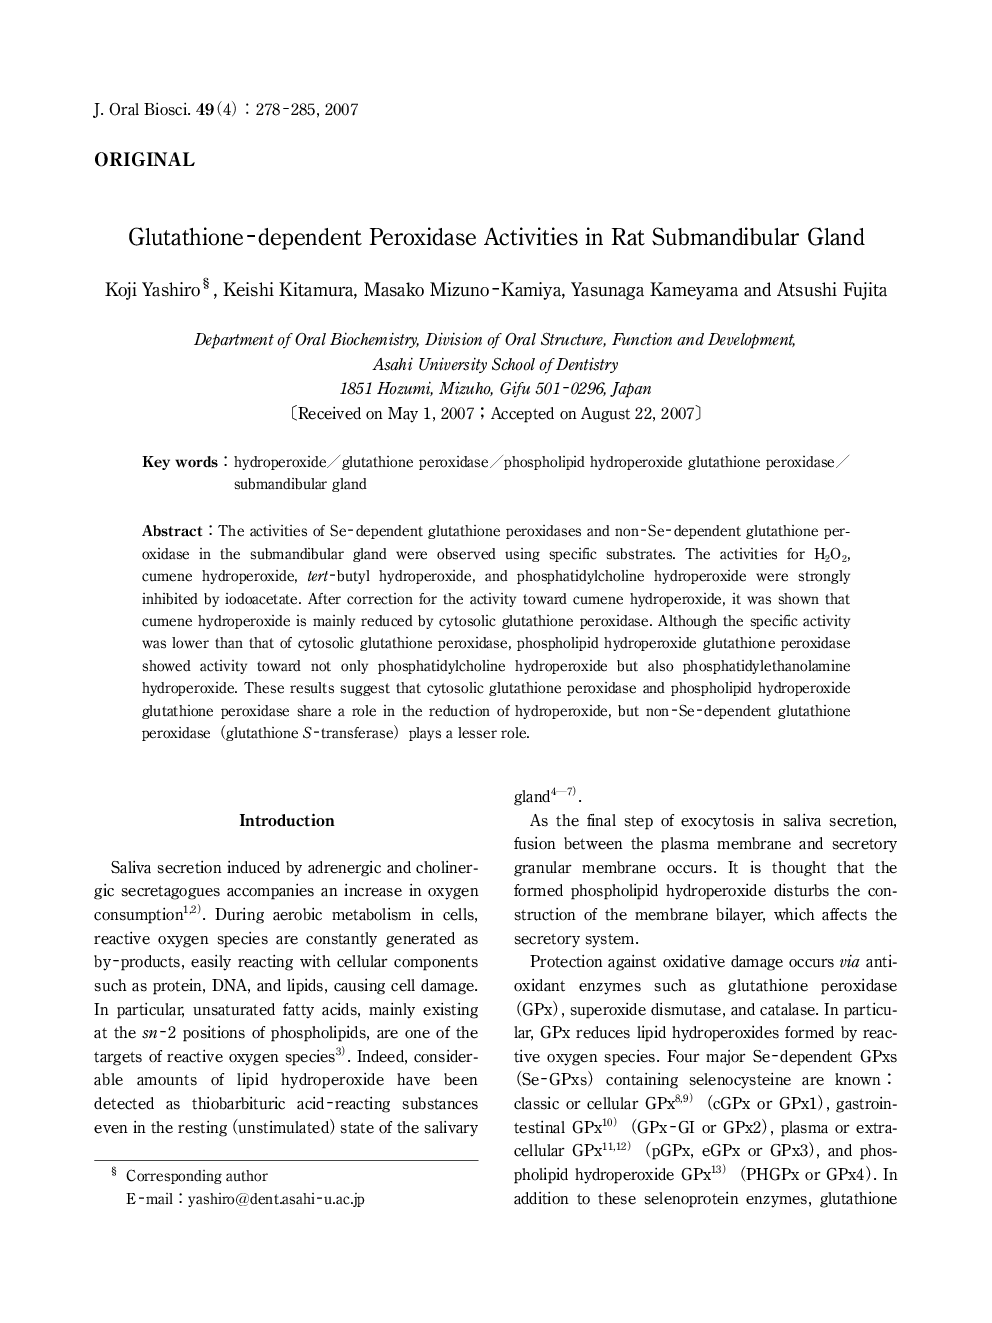 Glutathione-dependent Peroxidase Activities in Rat Submandibular Gland